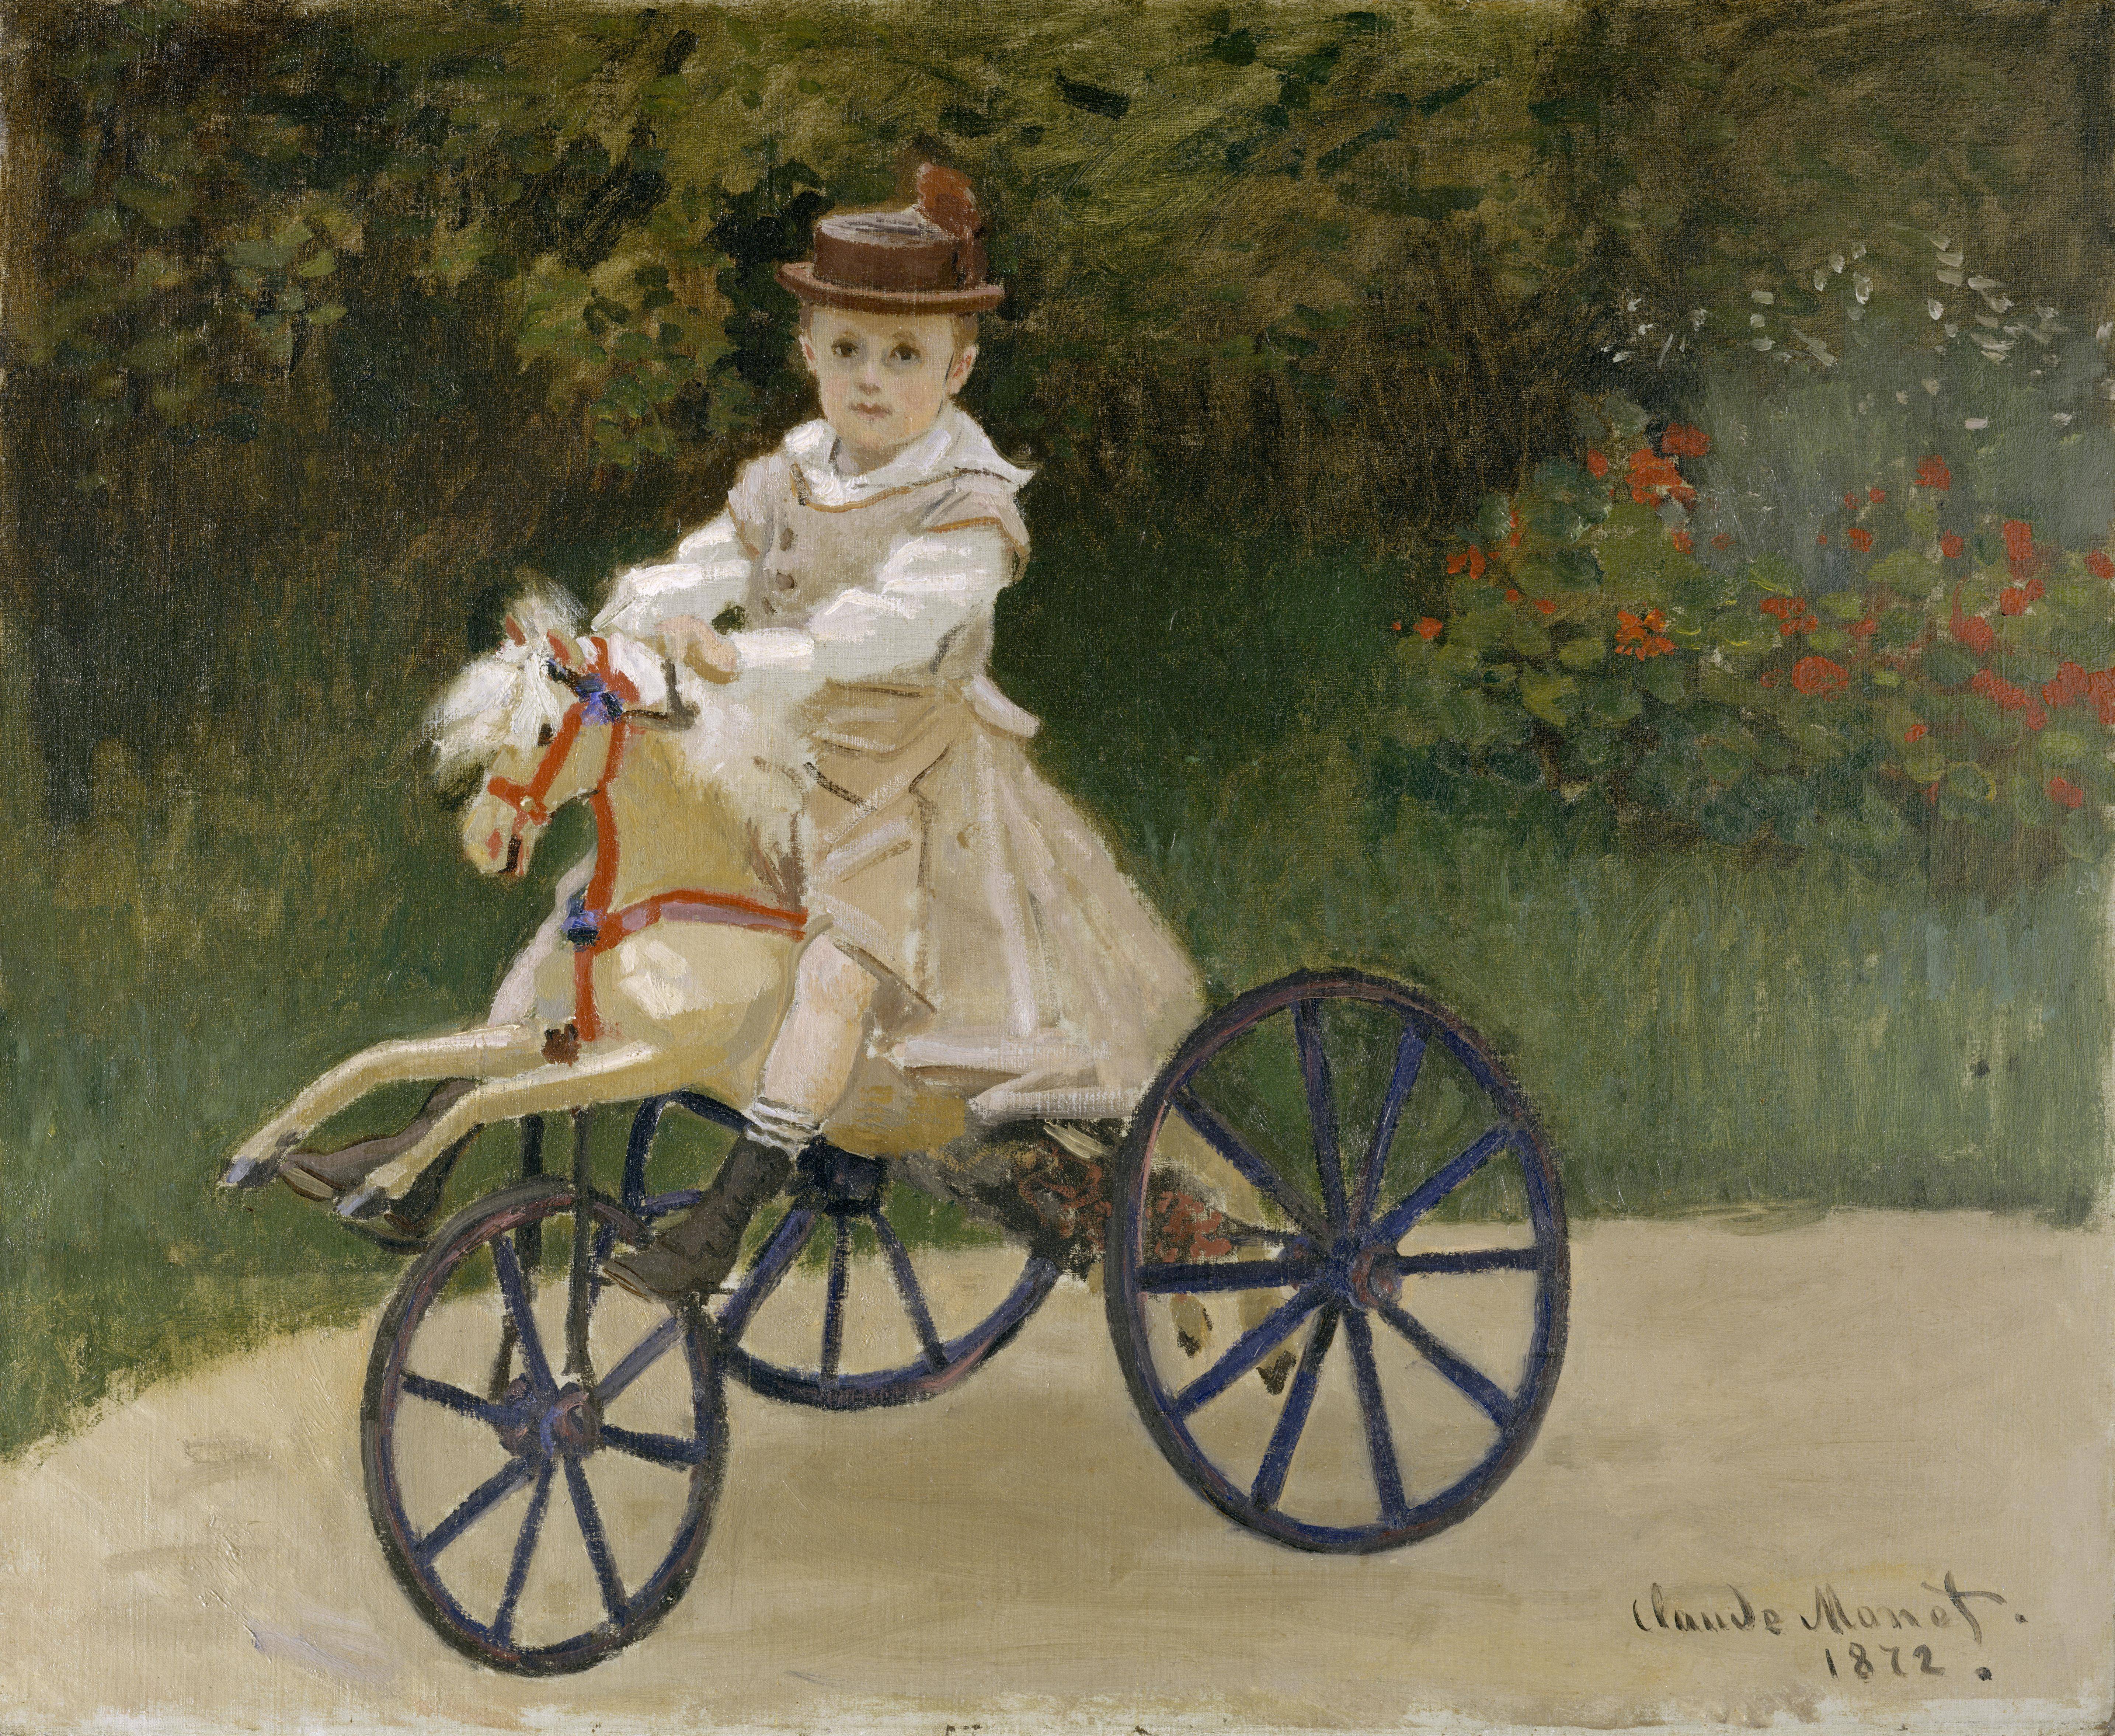 Claude Monet (1872)